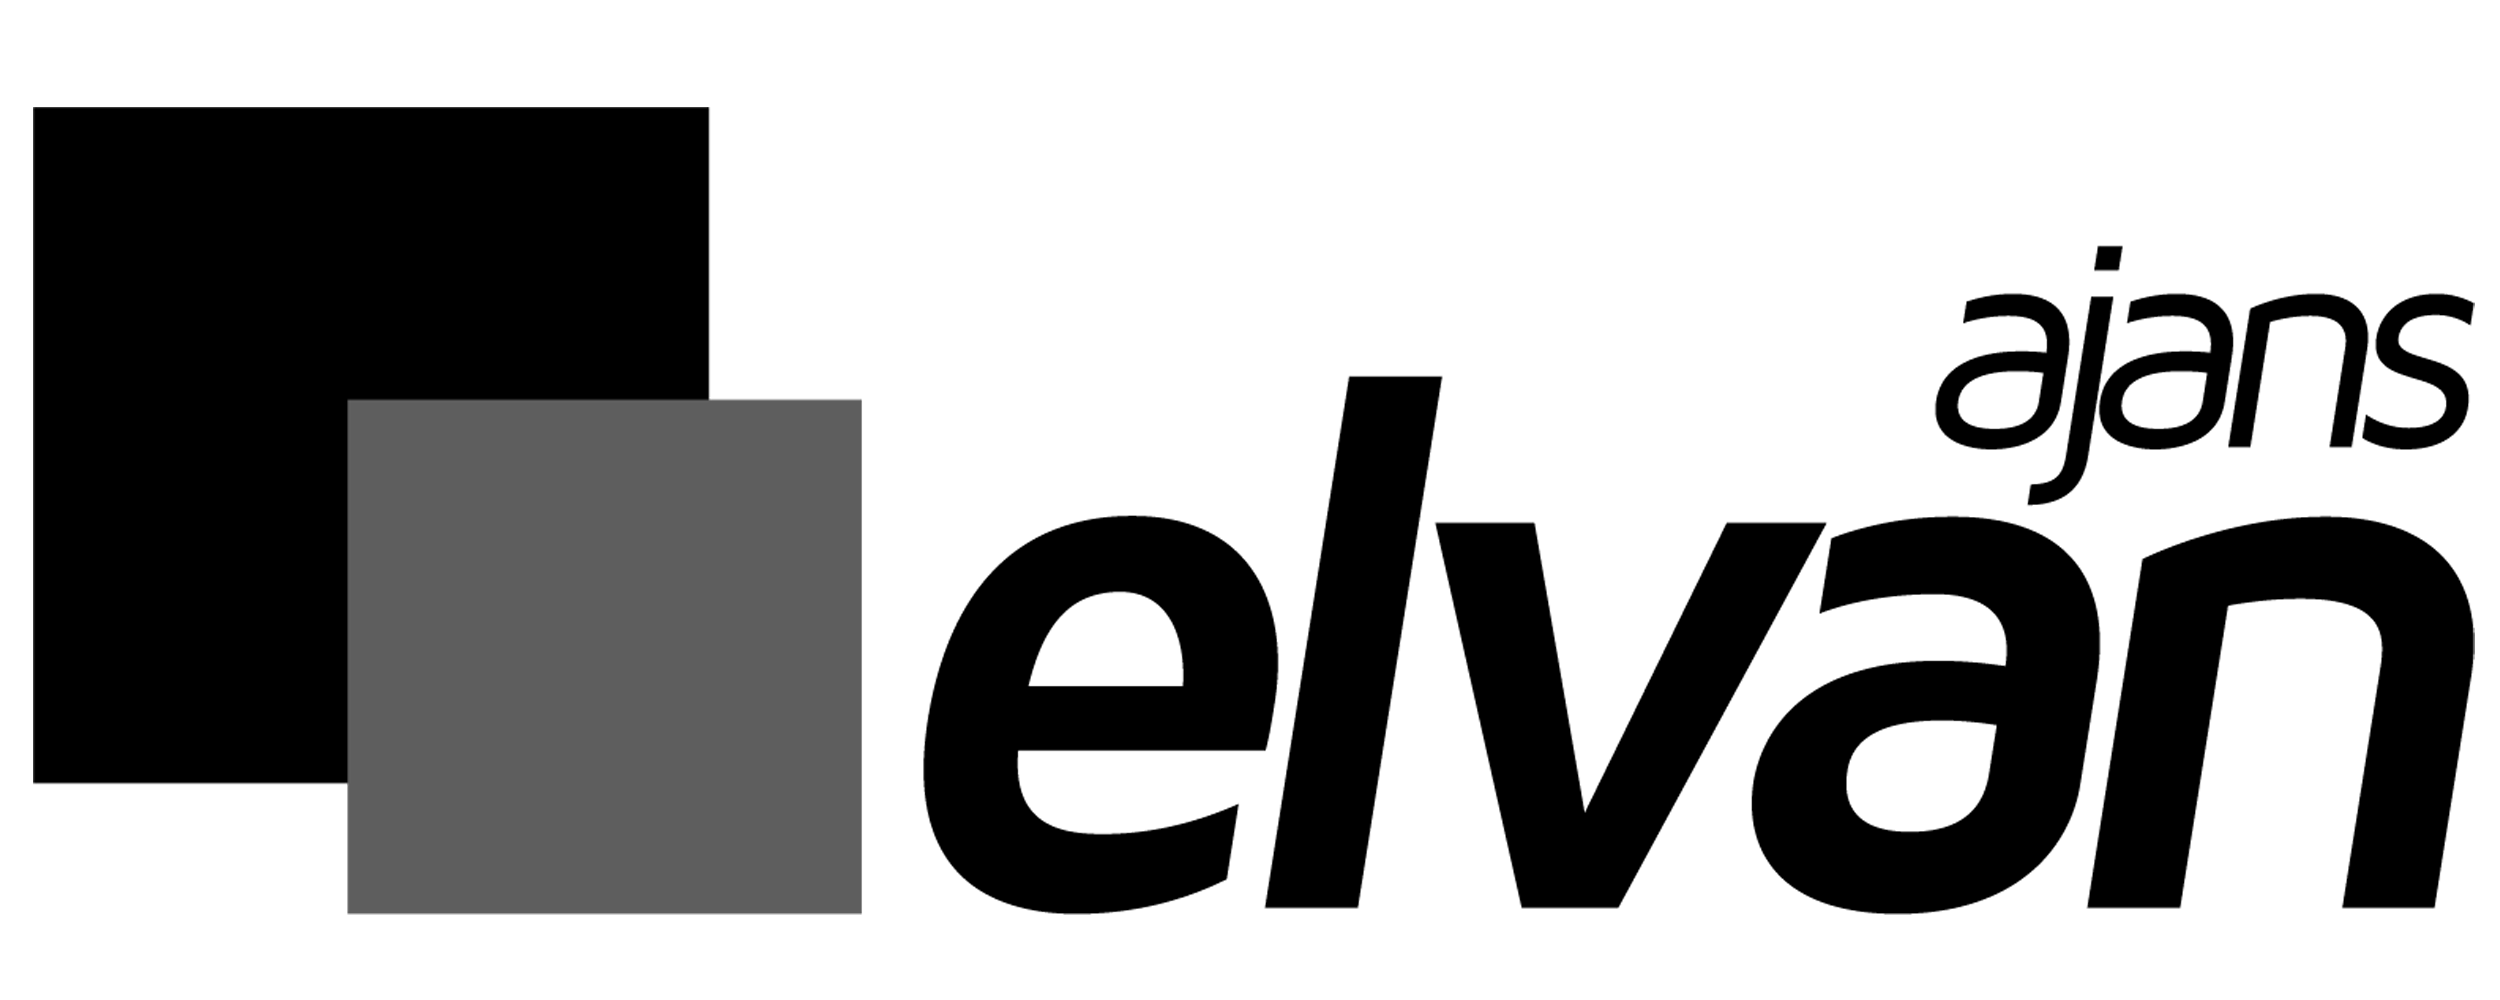 elvan-web-logo-65-white-02